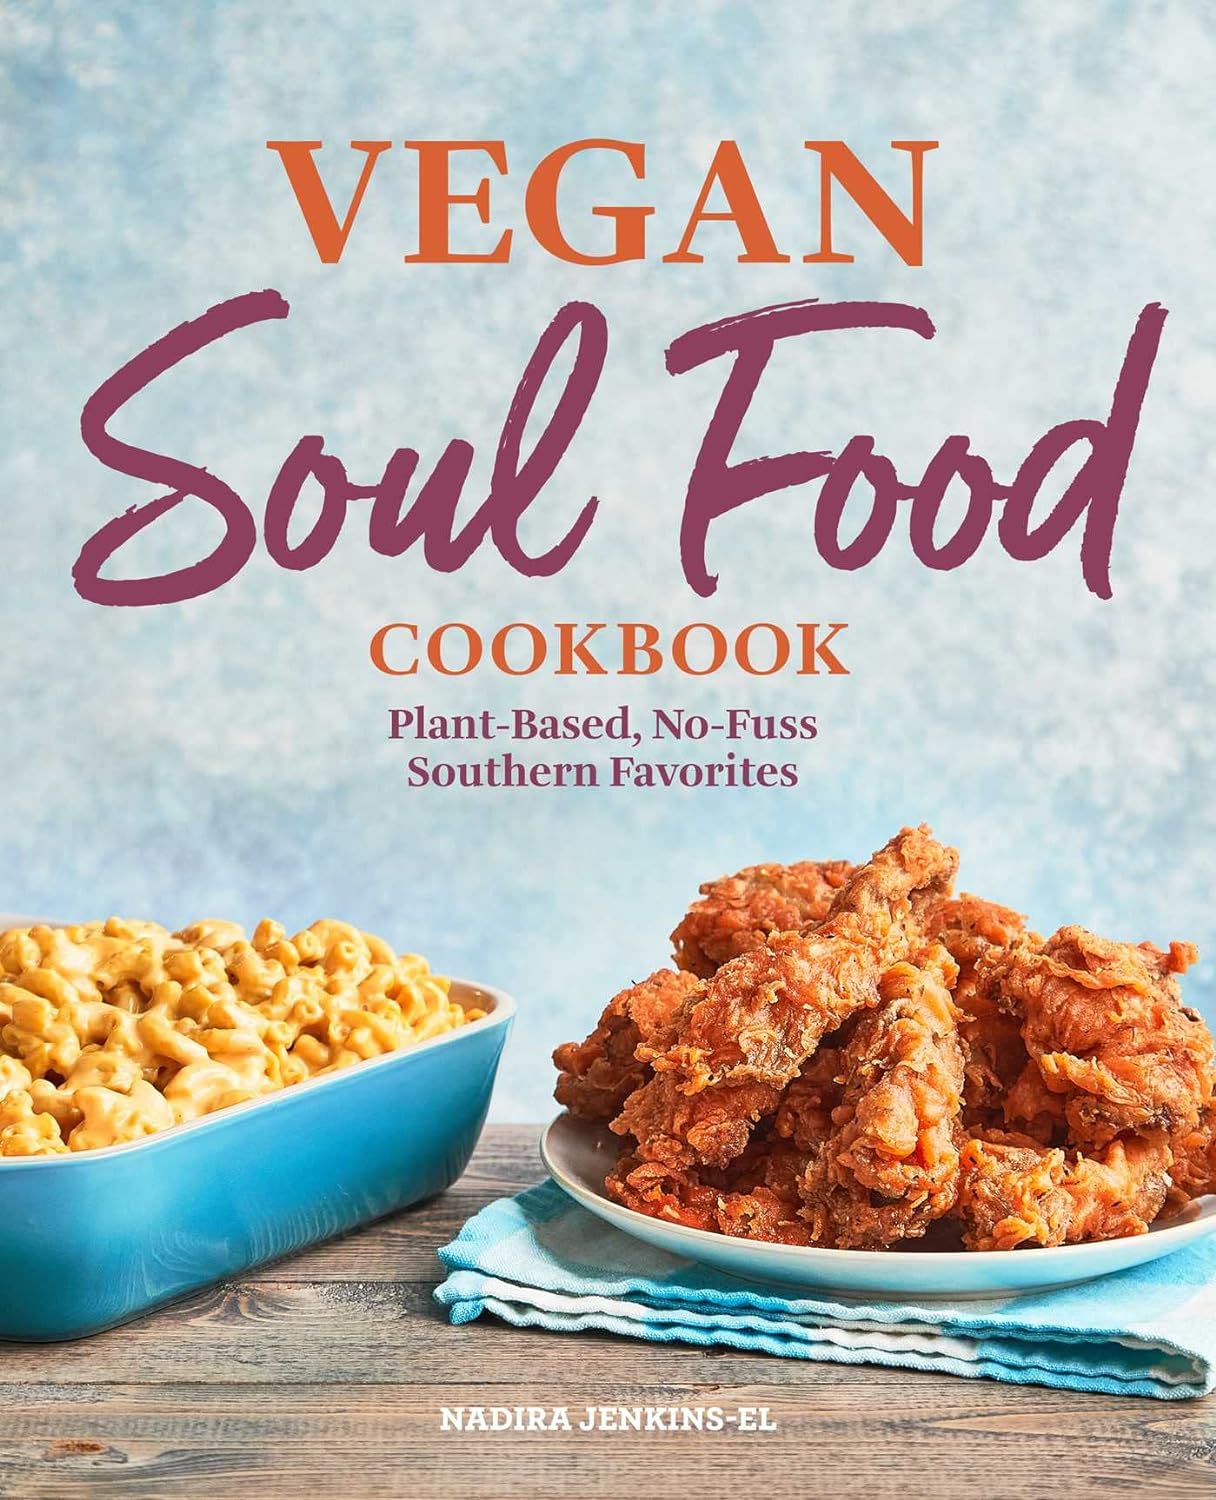 VegNews.VeganSoulFoodCookbook